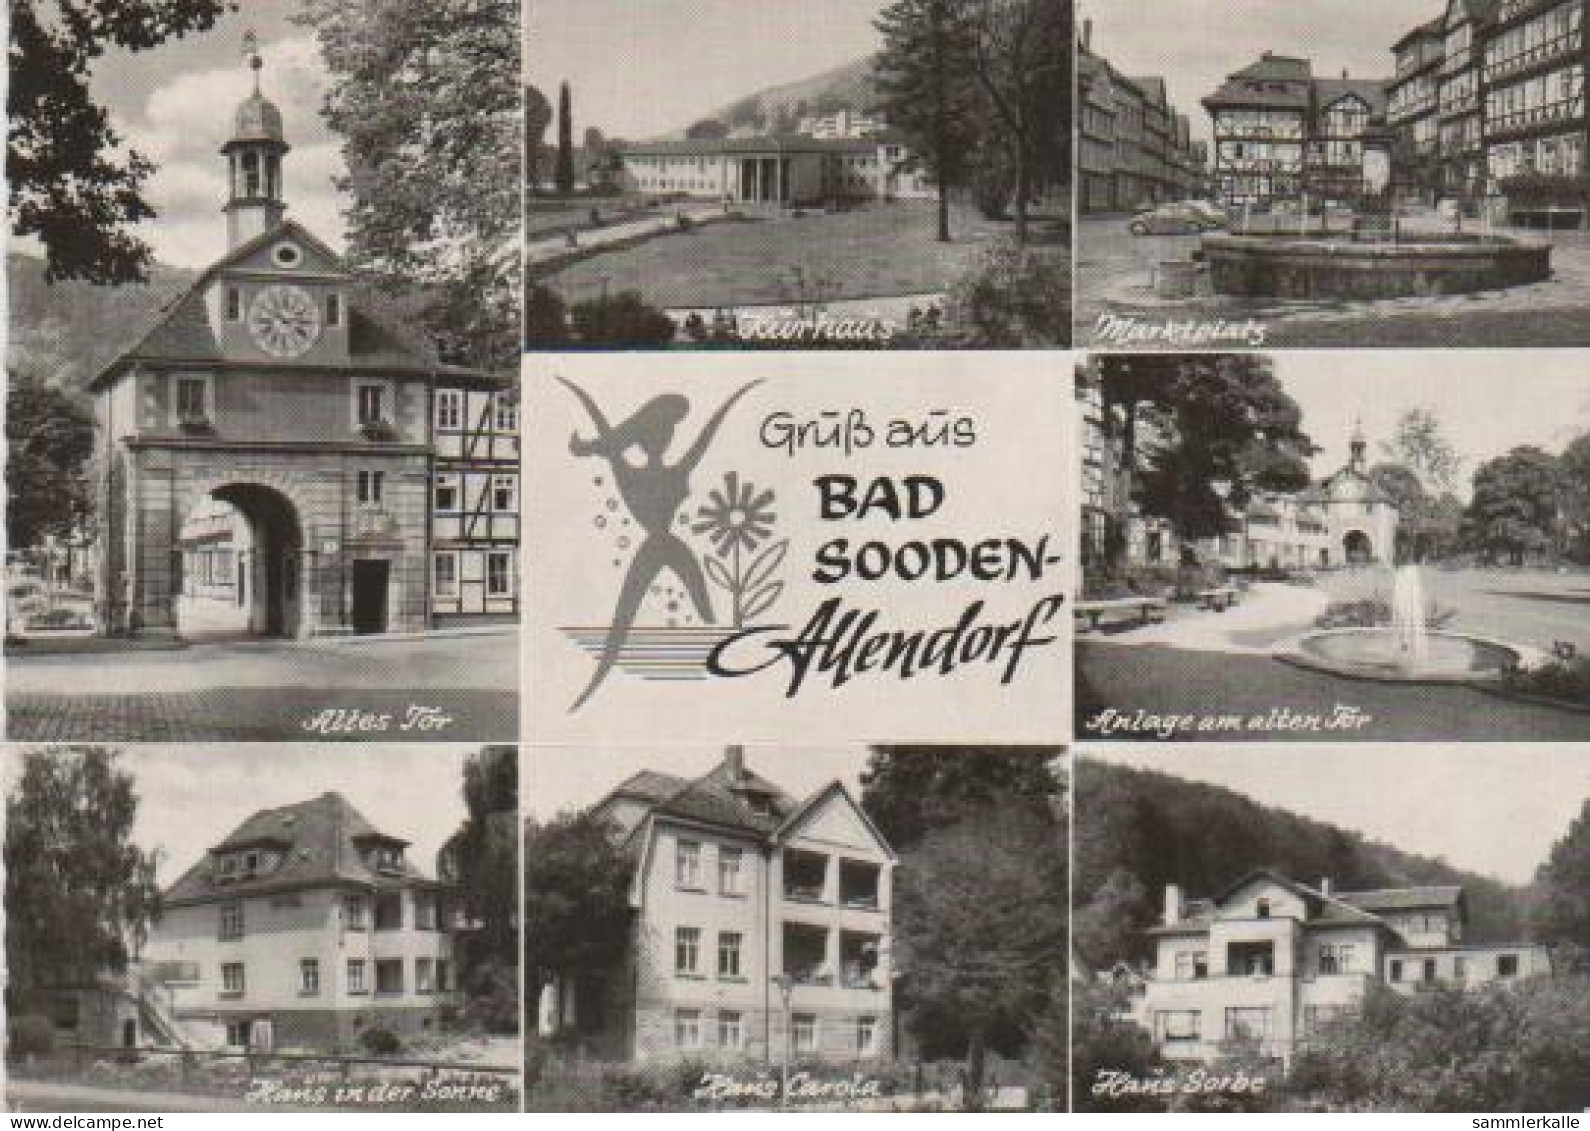 5037 - Bad Sooden-Allendorf - Altes Tor, Haus In Der Sonne, Kurhaus, Haus Carola, Marktplatz, Haus Sorbe - Bad Sooden-Allendorf